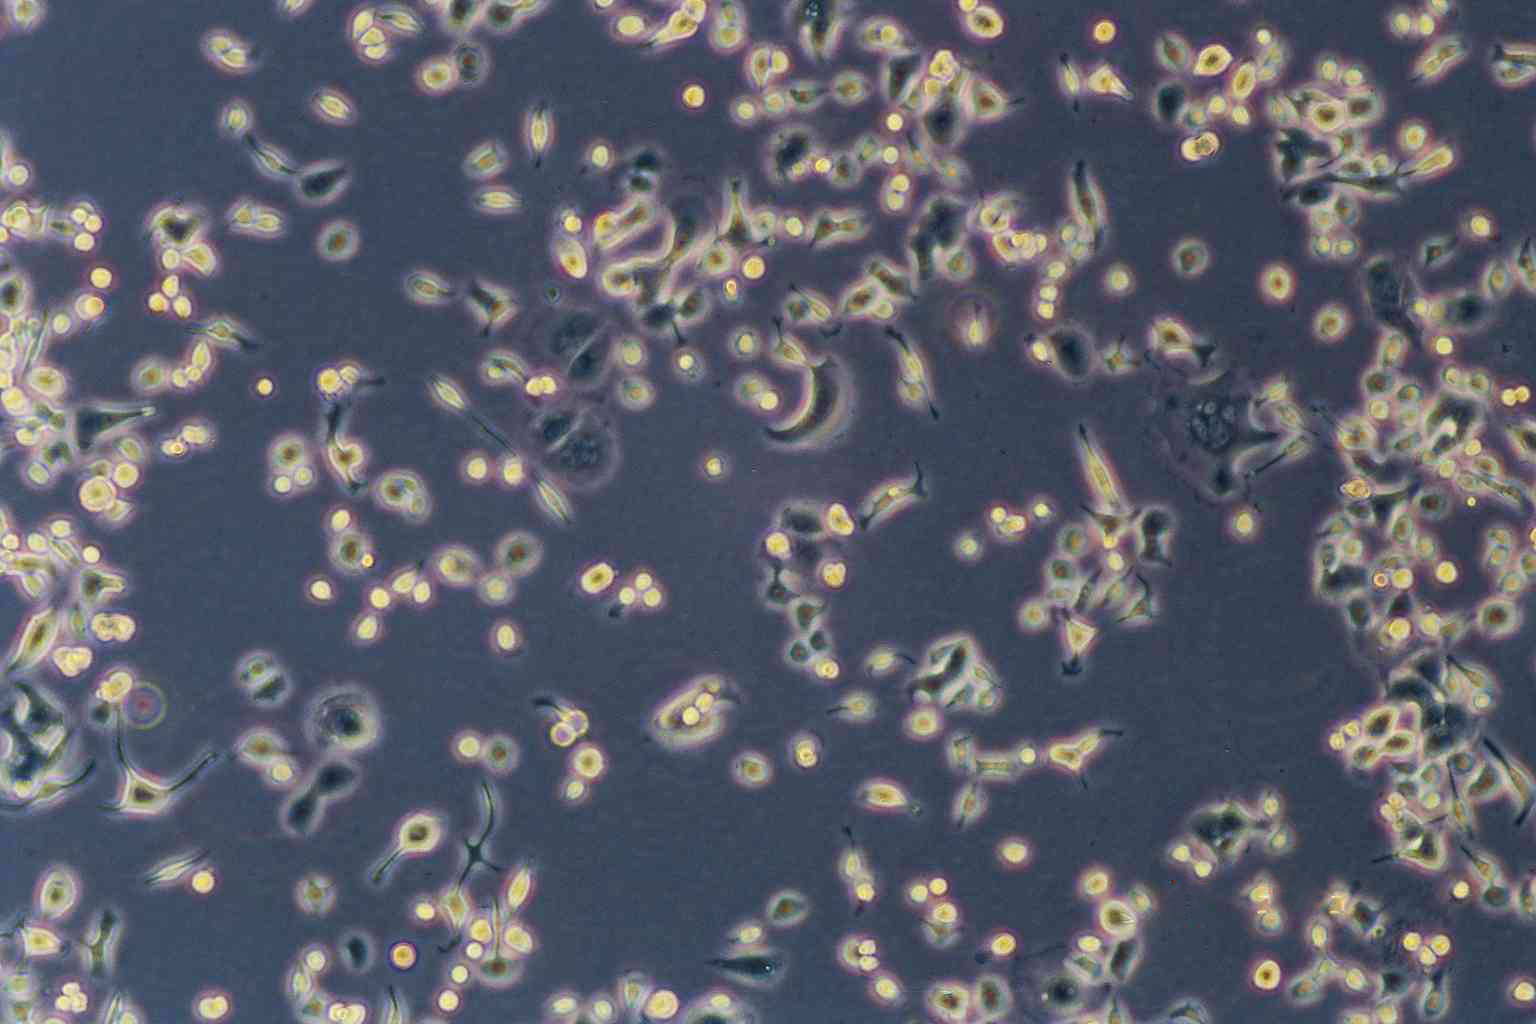 MLO-Y4 Cells|小鼠骨样细胞系